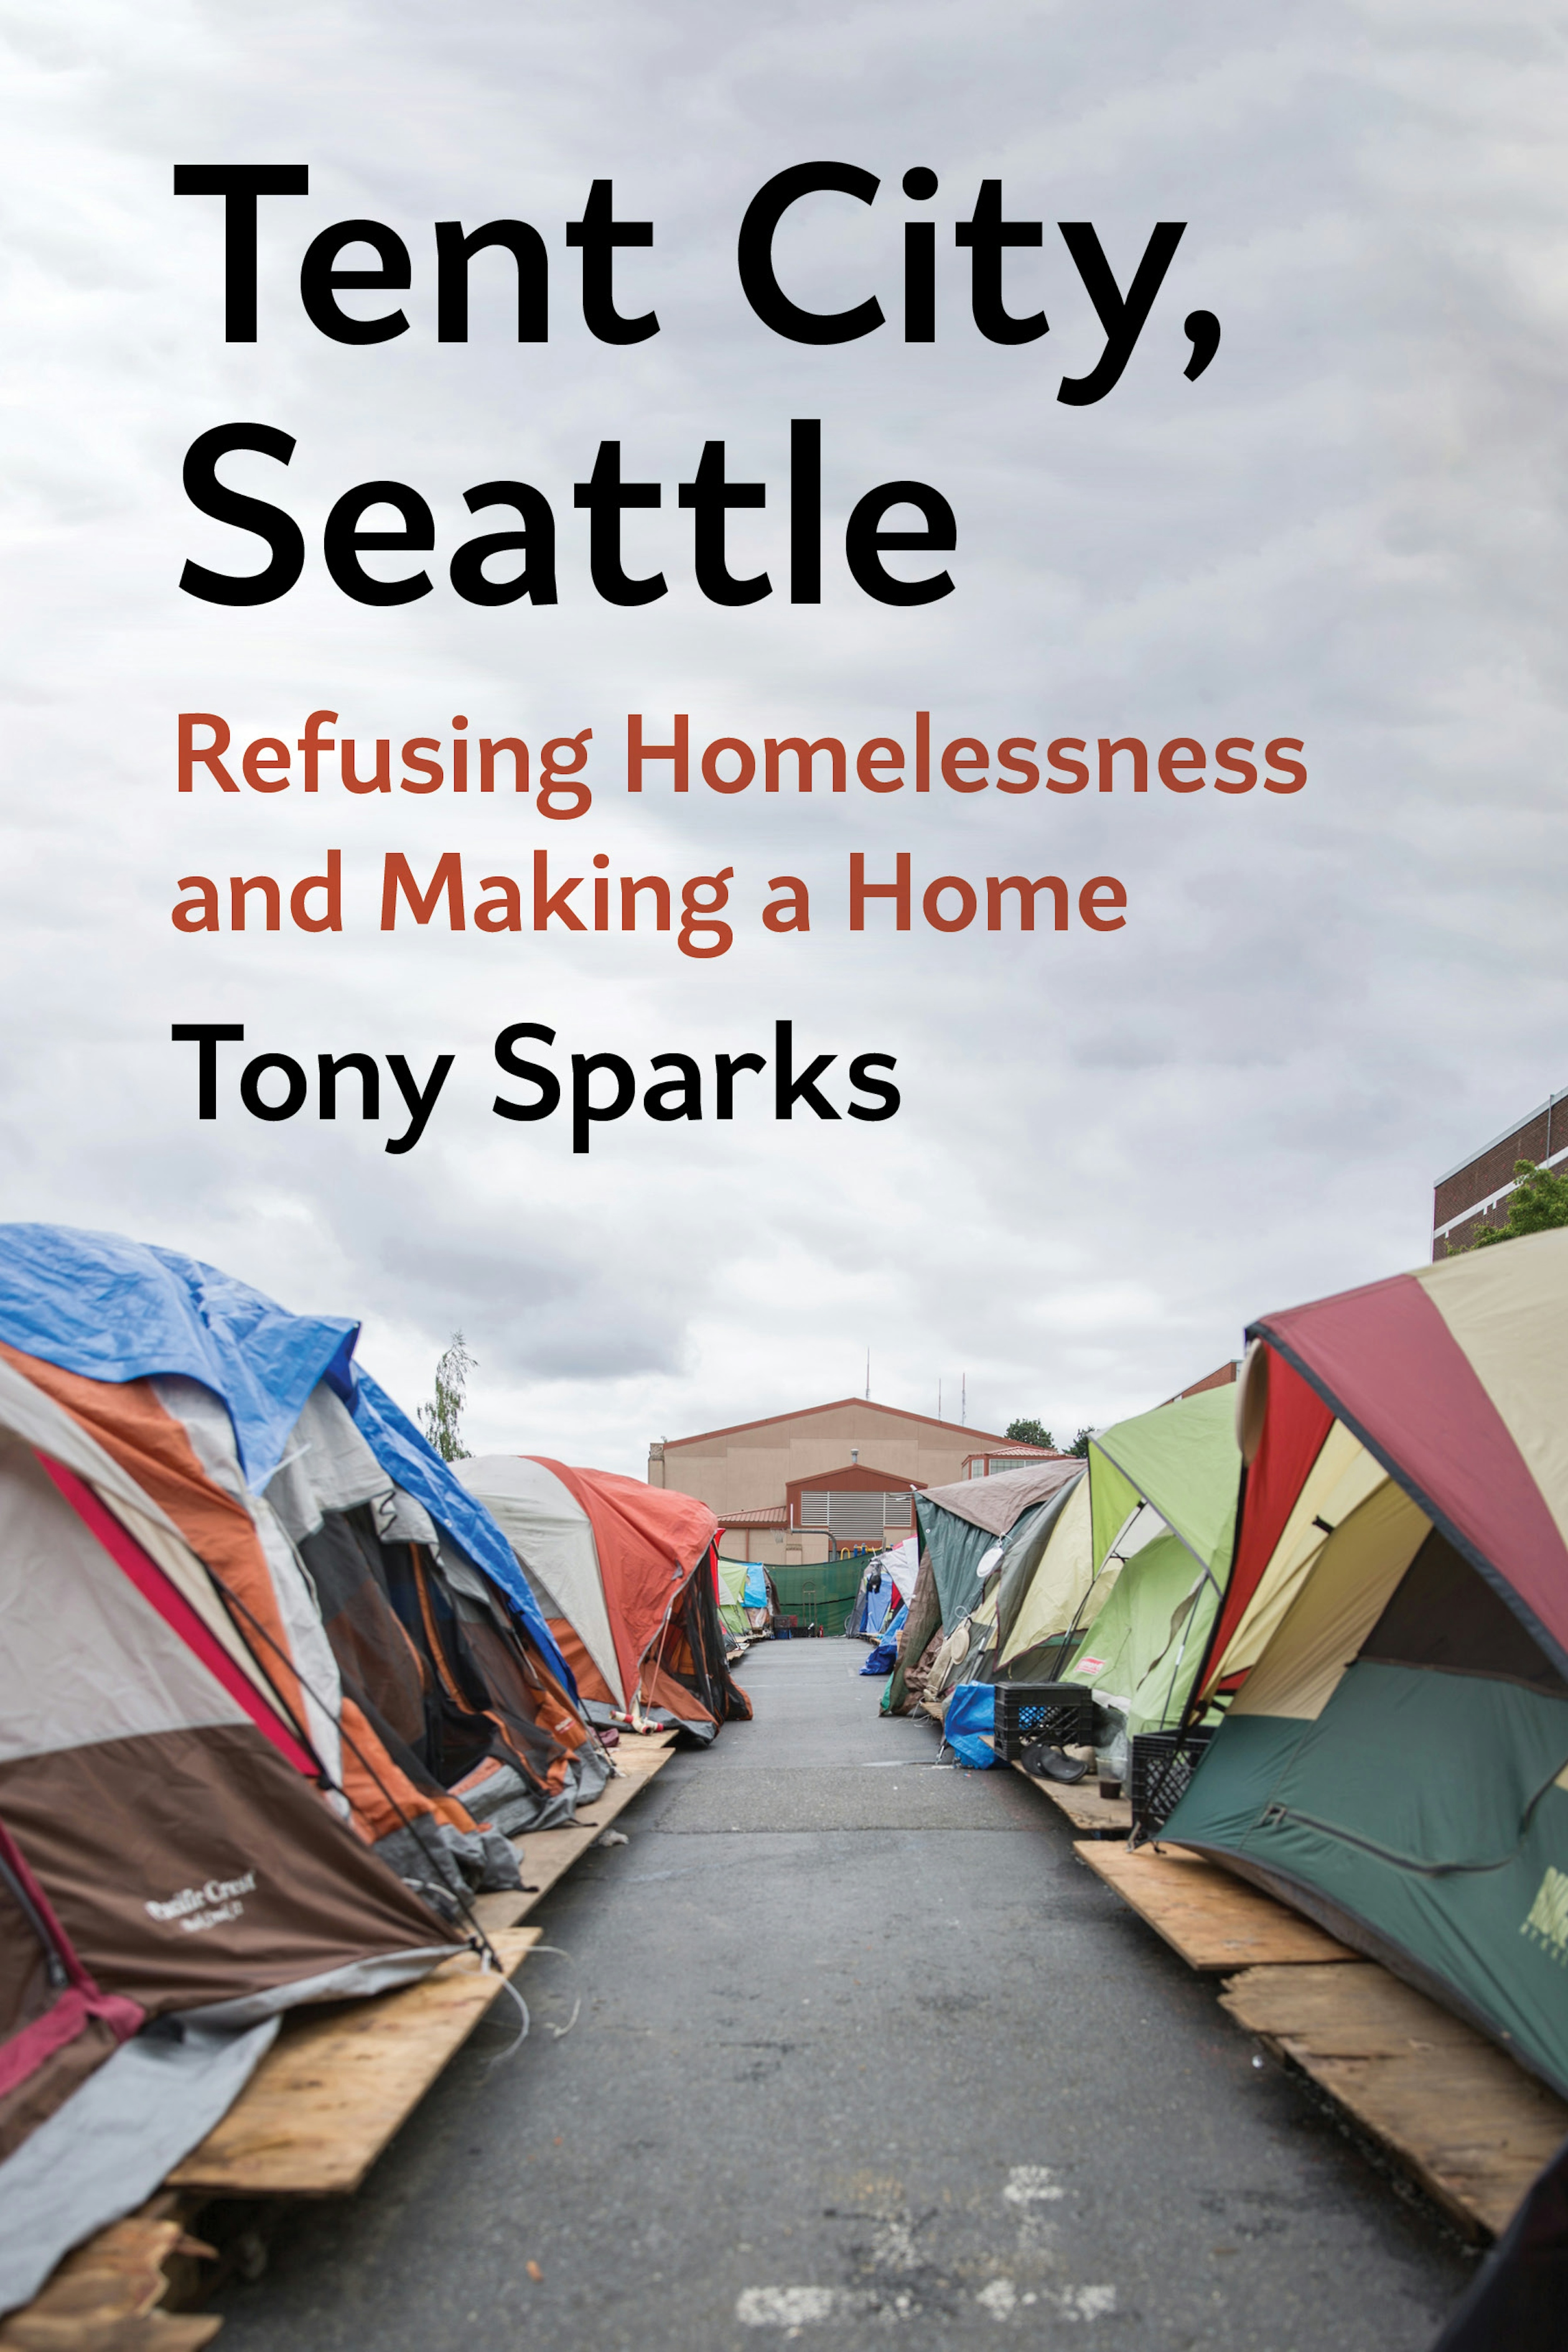 Tent City, Seattle